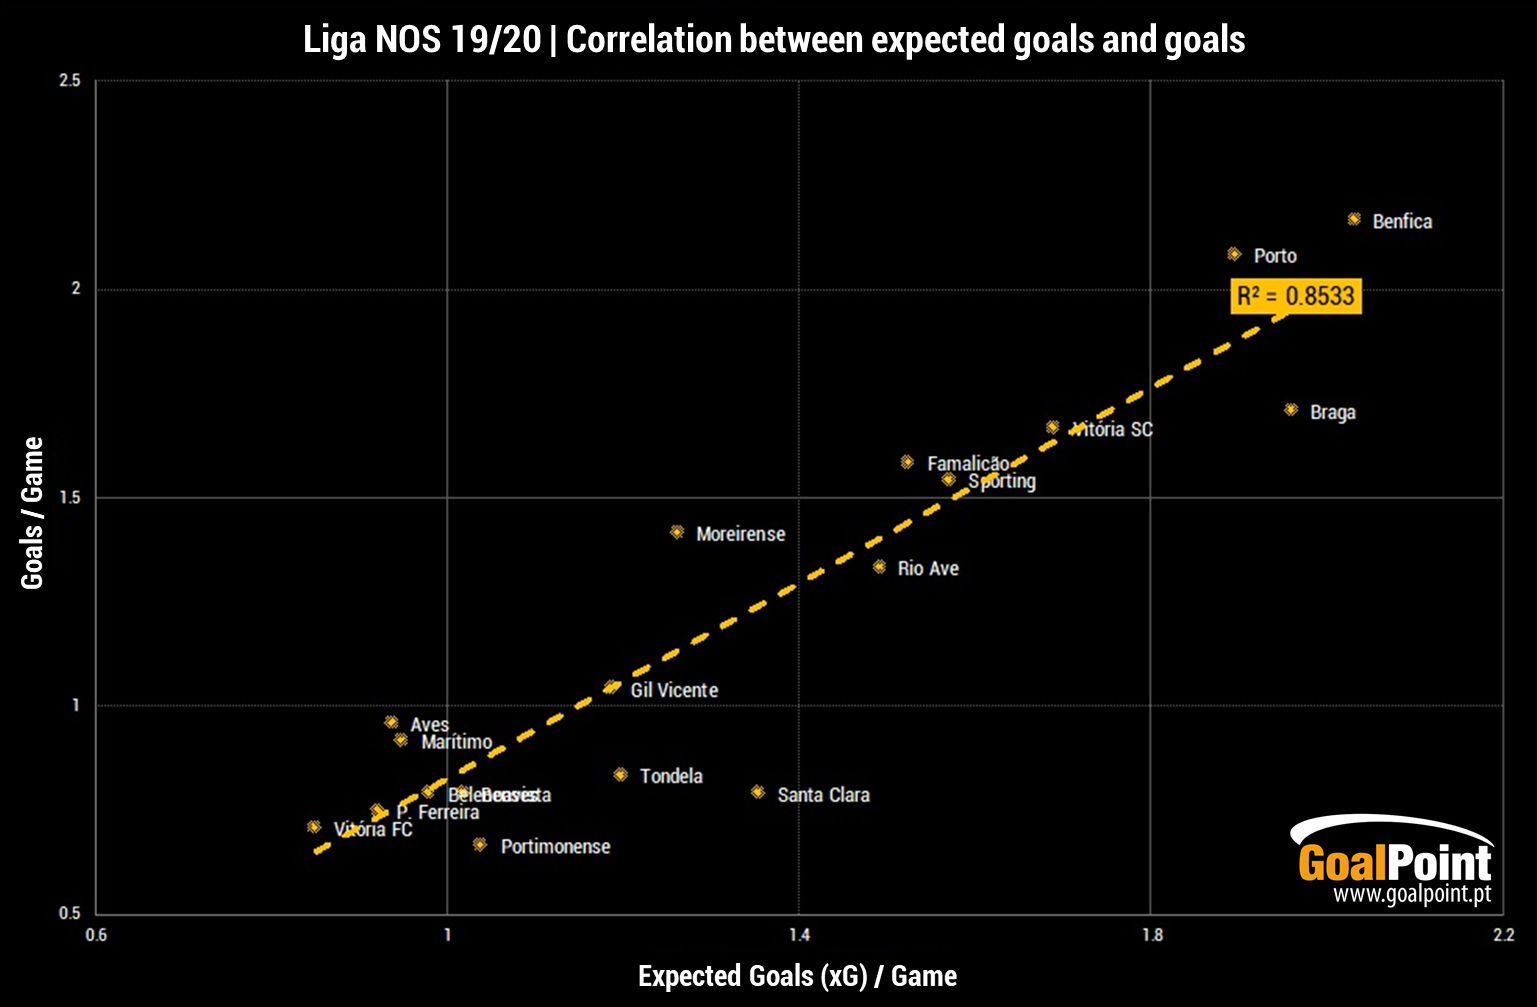 GoalPoint-LigaNOS1920-Correlation-xG-Goals-EN